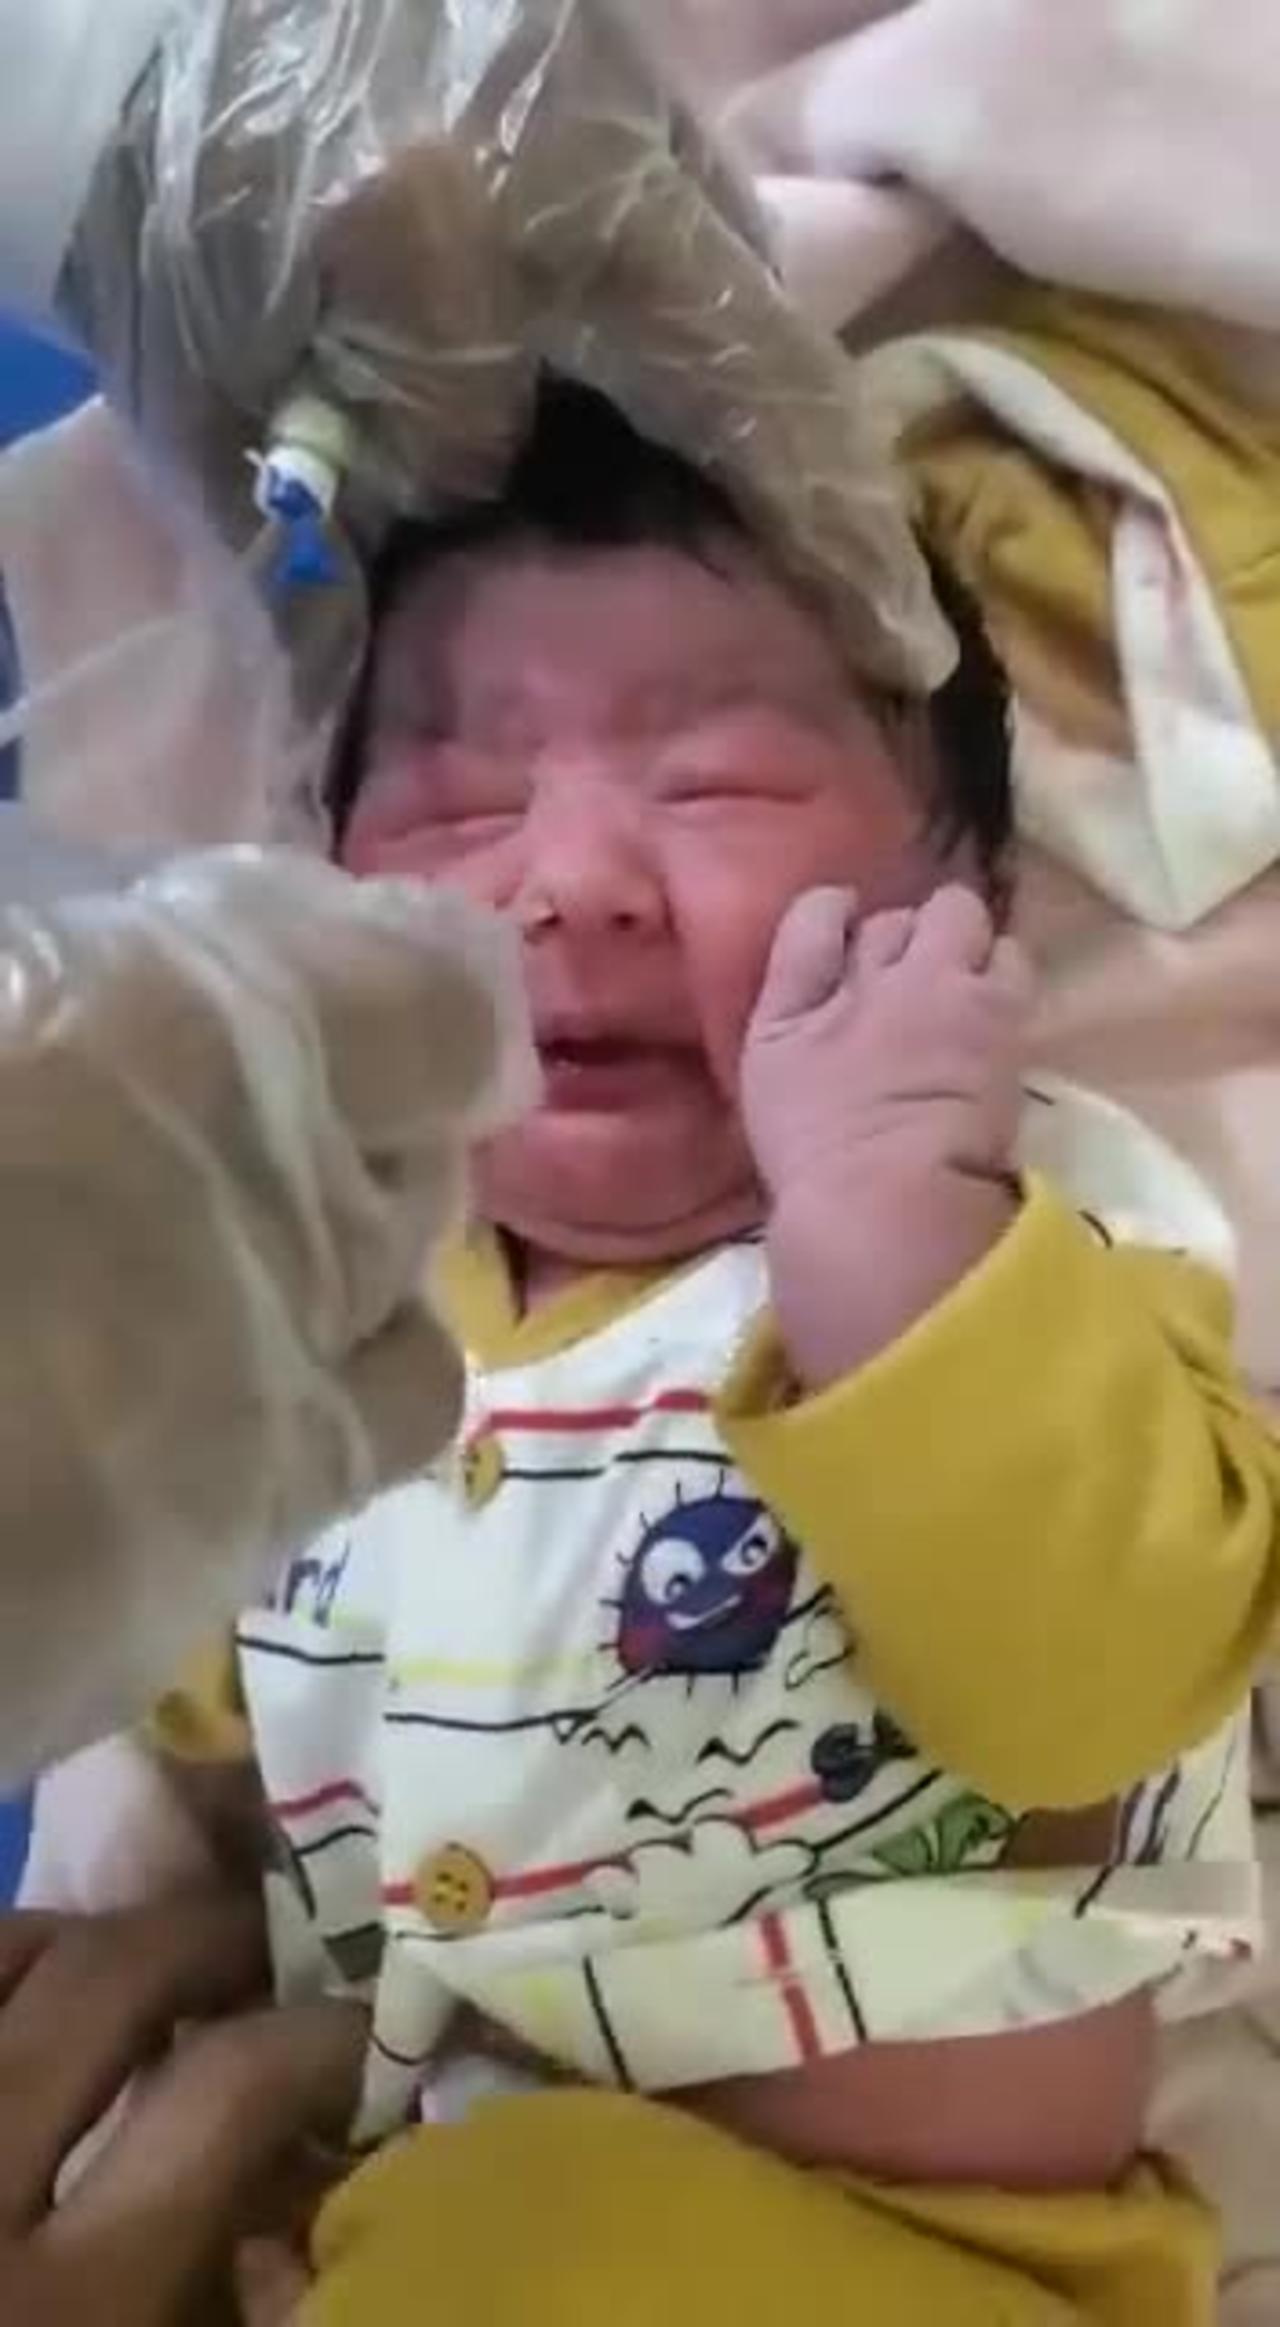 sad moment video short of new born baby